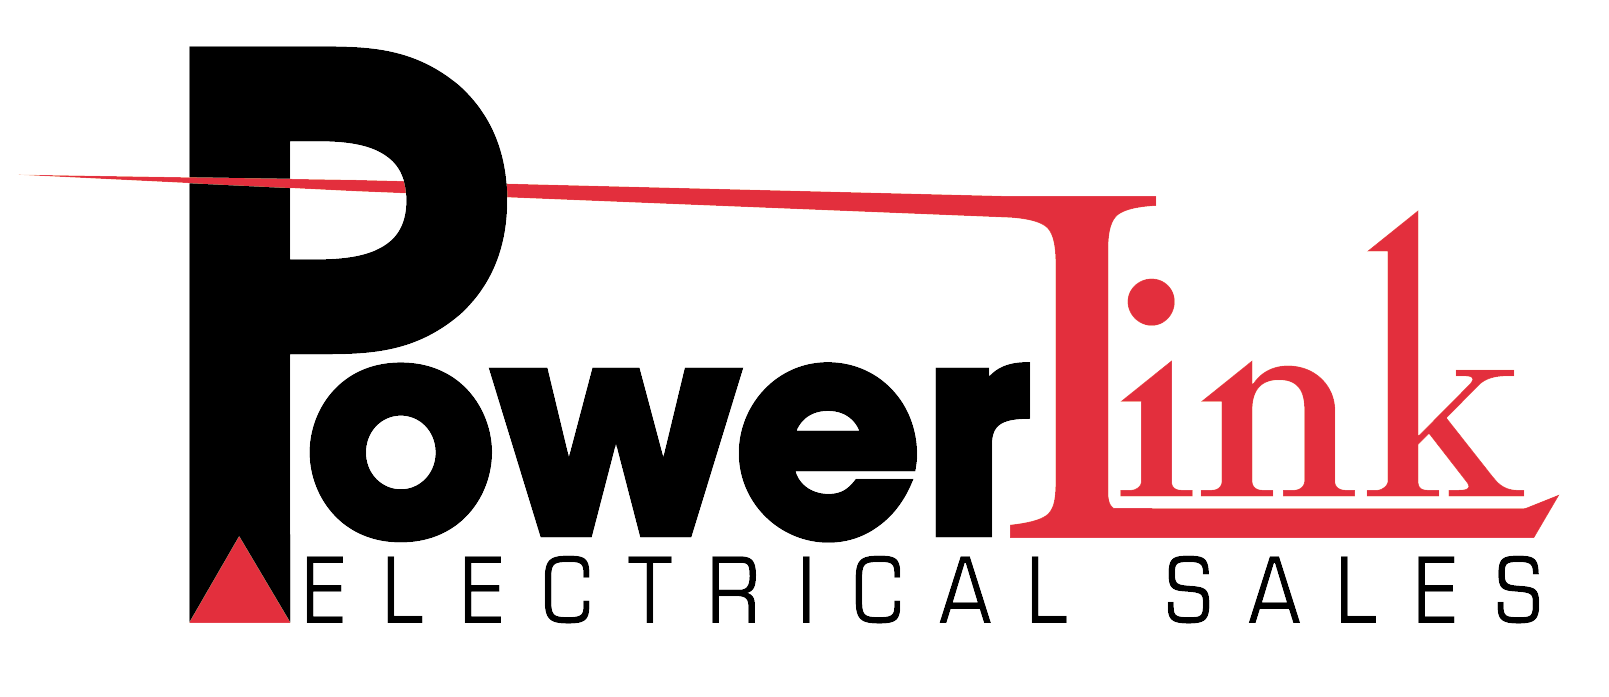 Powerlink-logo